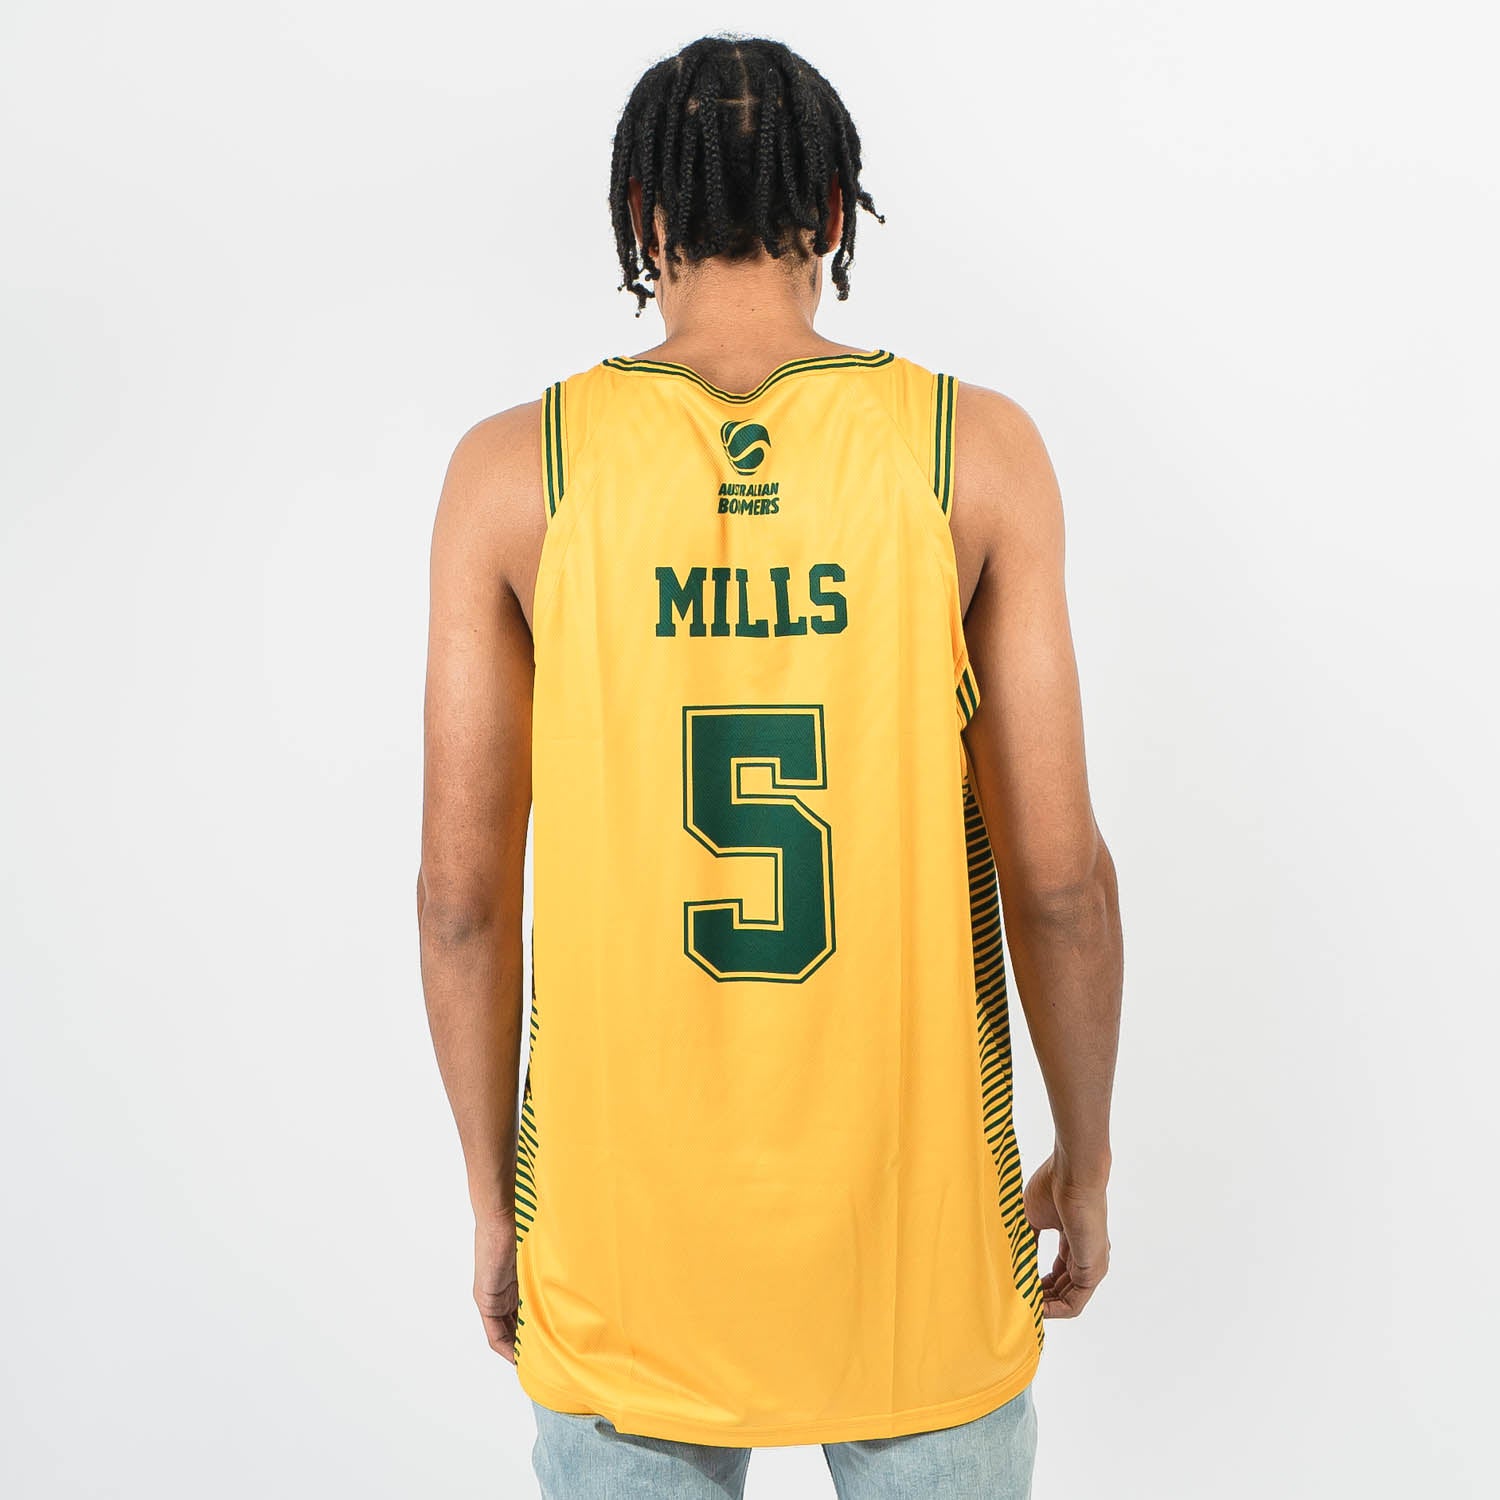 patty mills boomers jersey